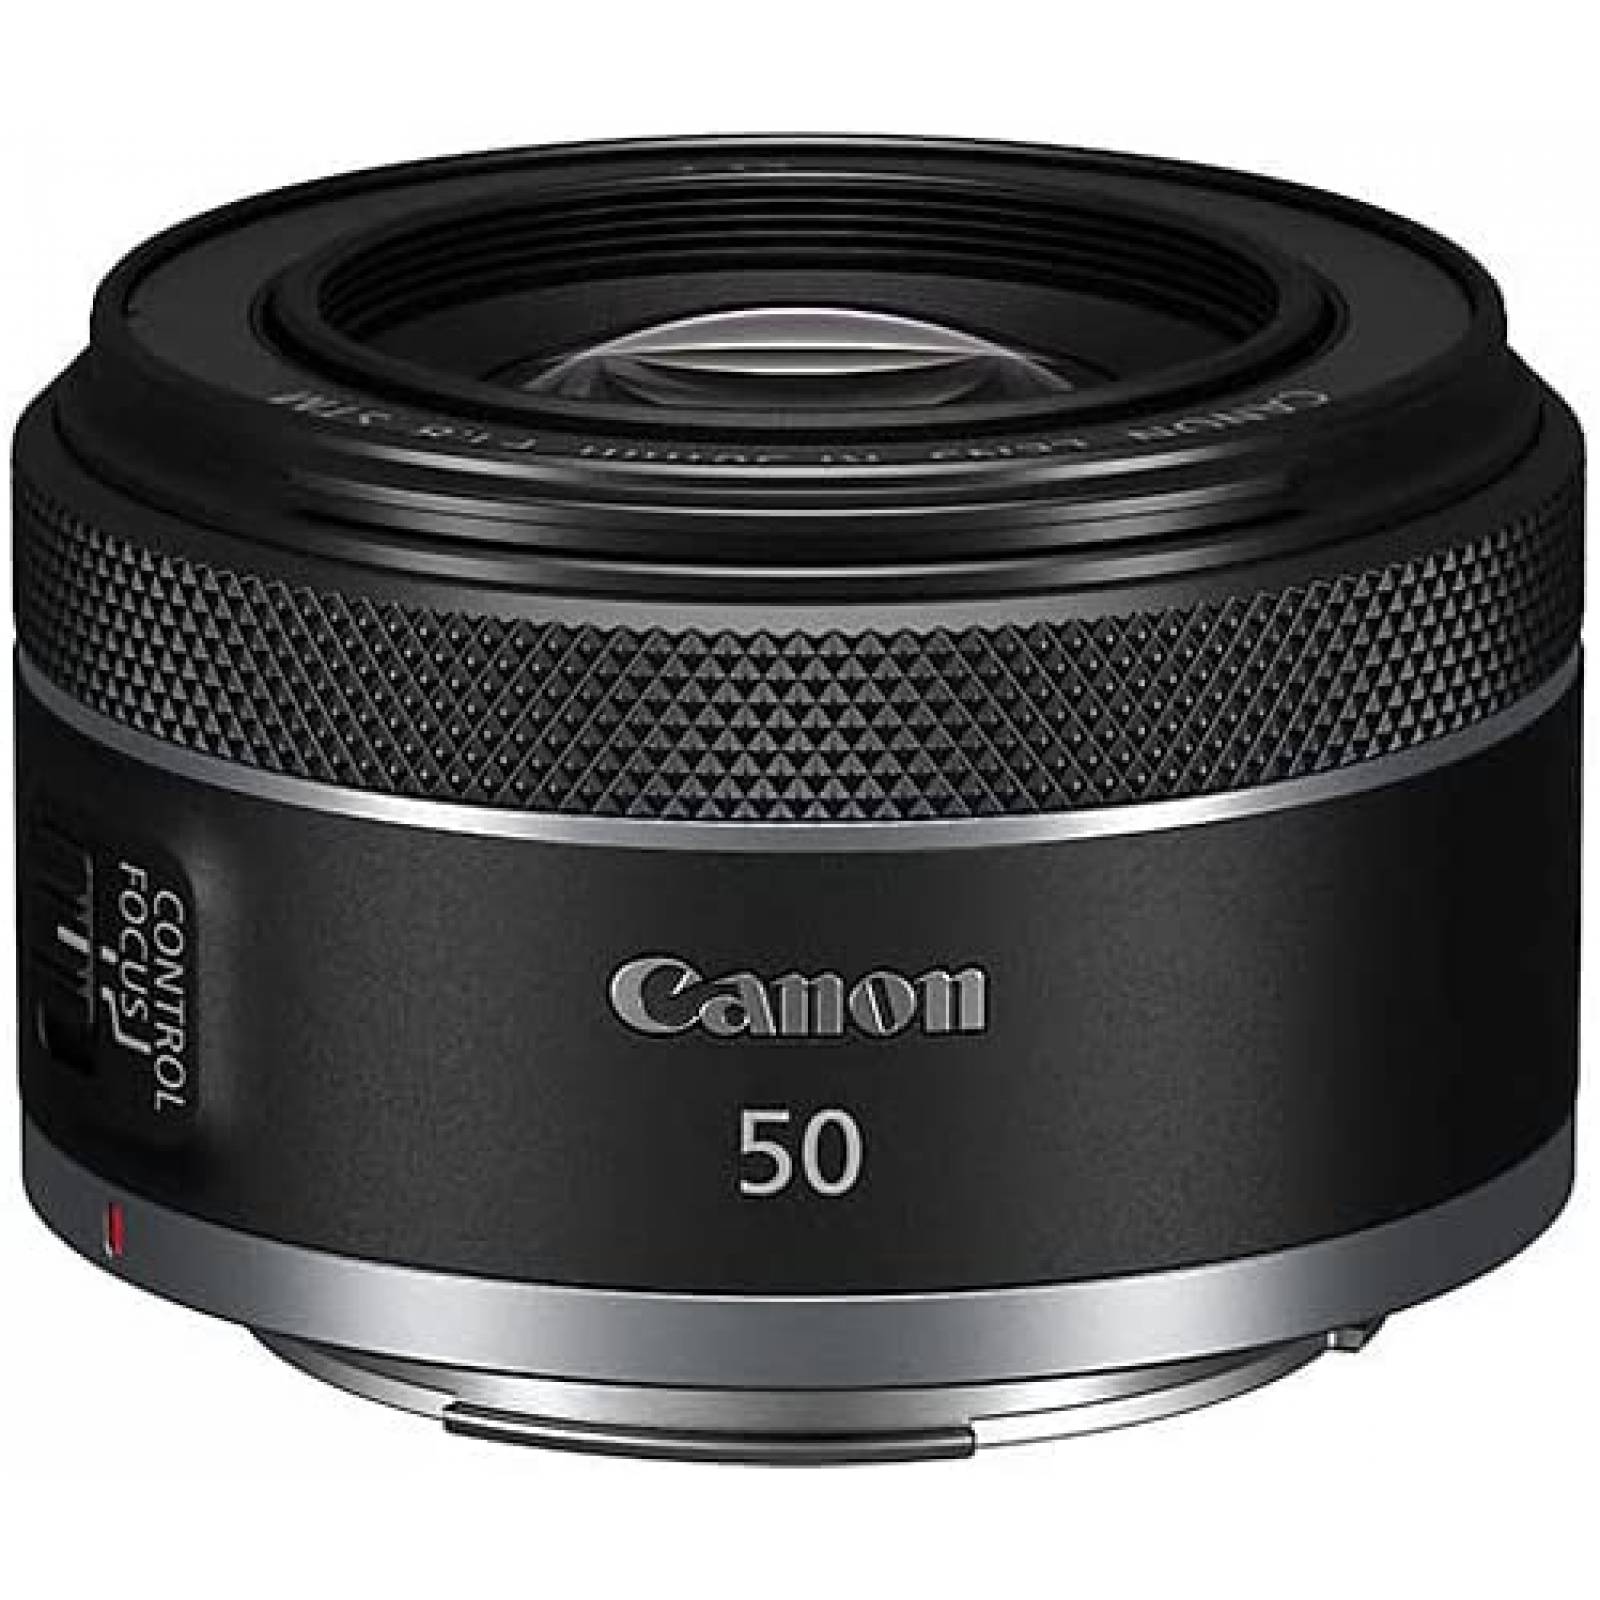 Cámara sin espejo Canon modelo EOS R50 con lente zoom f/6.3